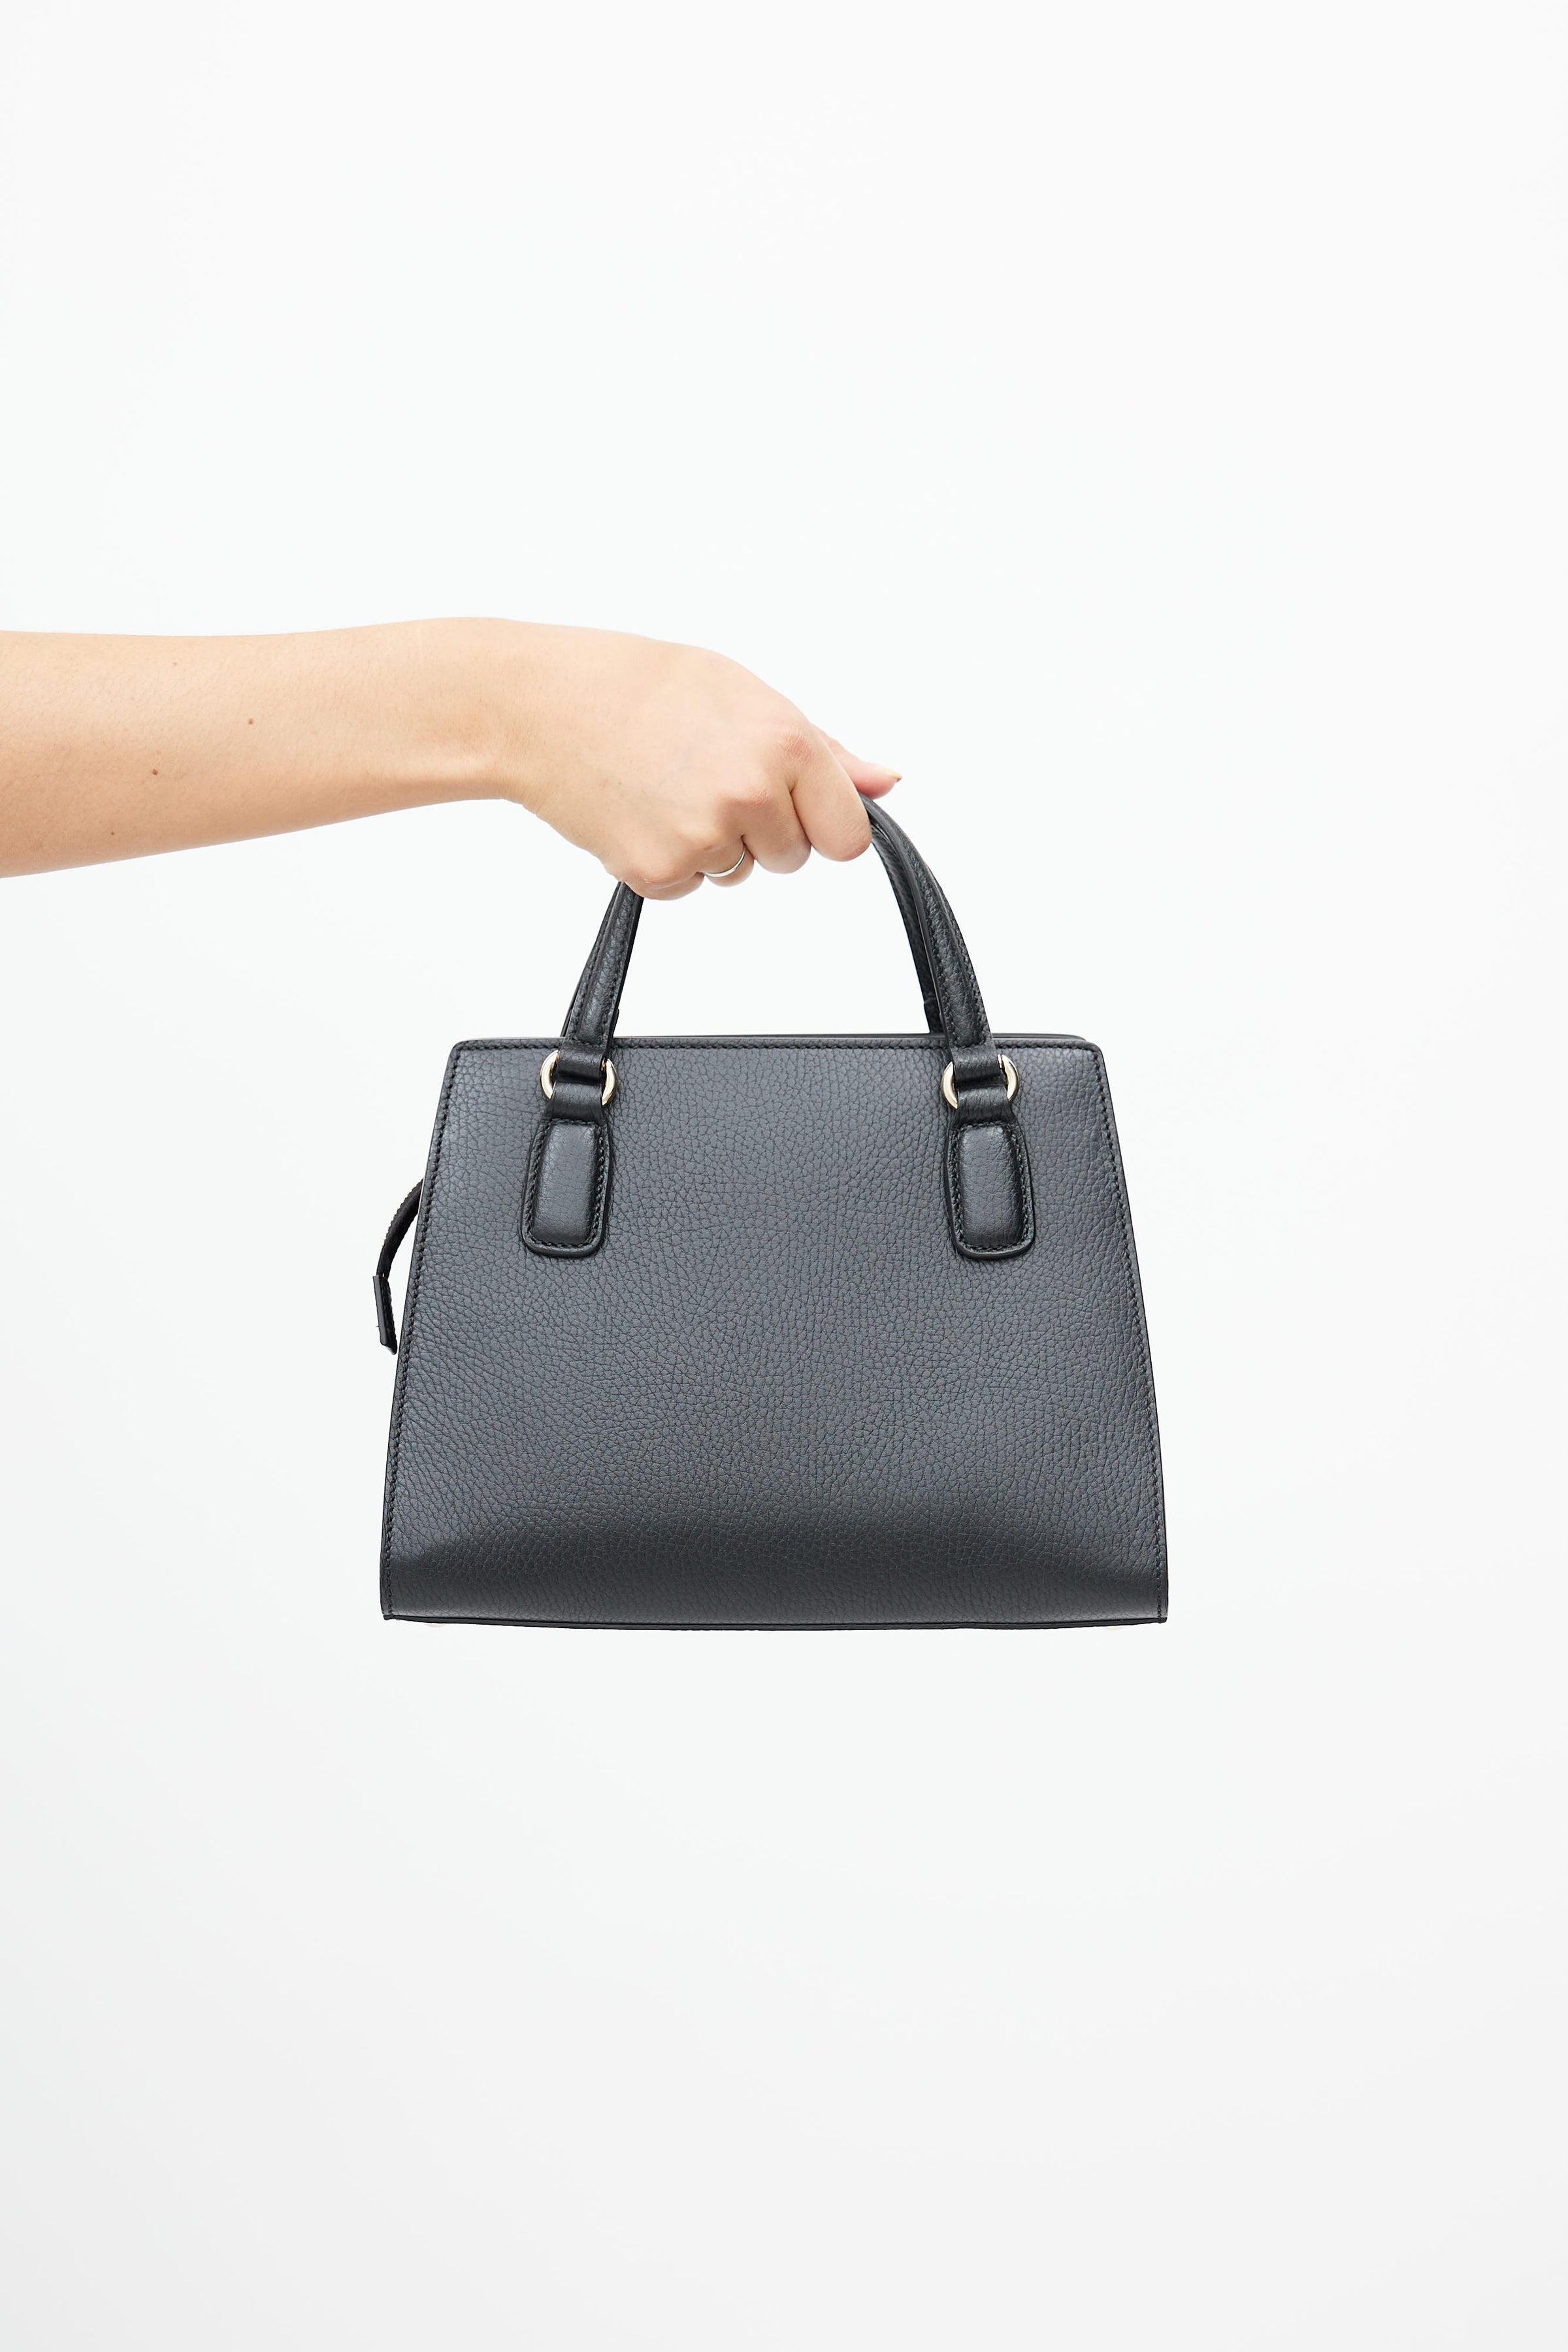 Gucci Medium Soho Flap Bag - Black Crossbody Bags, Handbags - GUC1368896